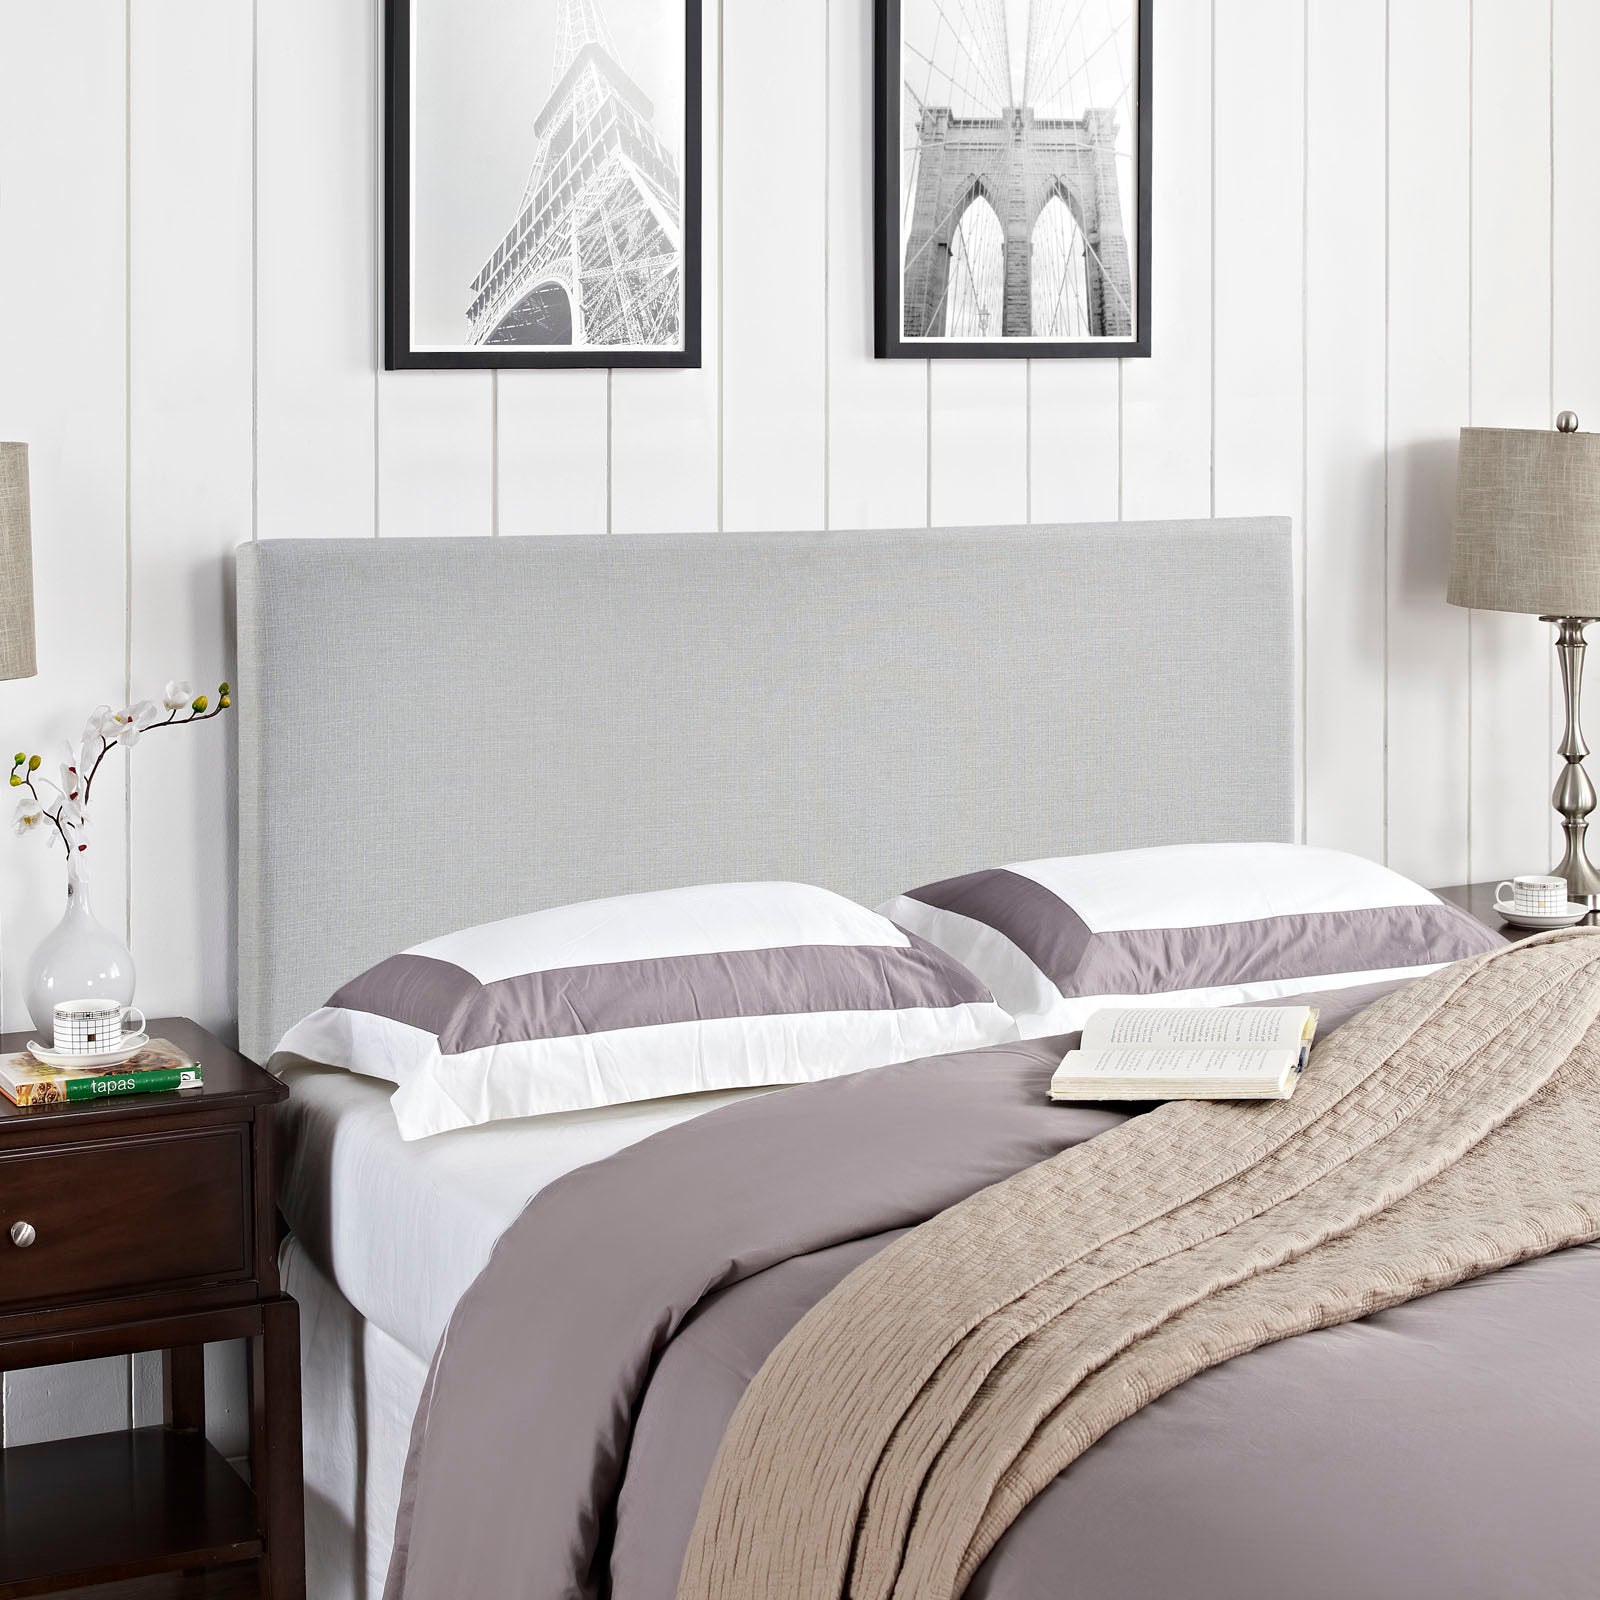 Region Queen Upholstered Headboard - East Shore Modern Home Furnishings